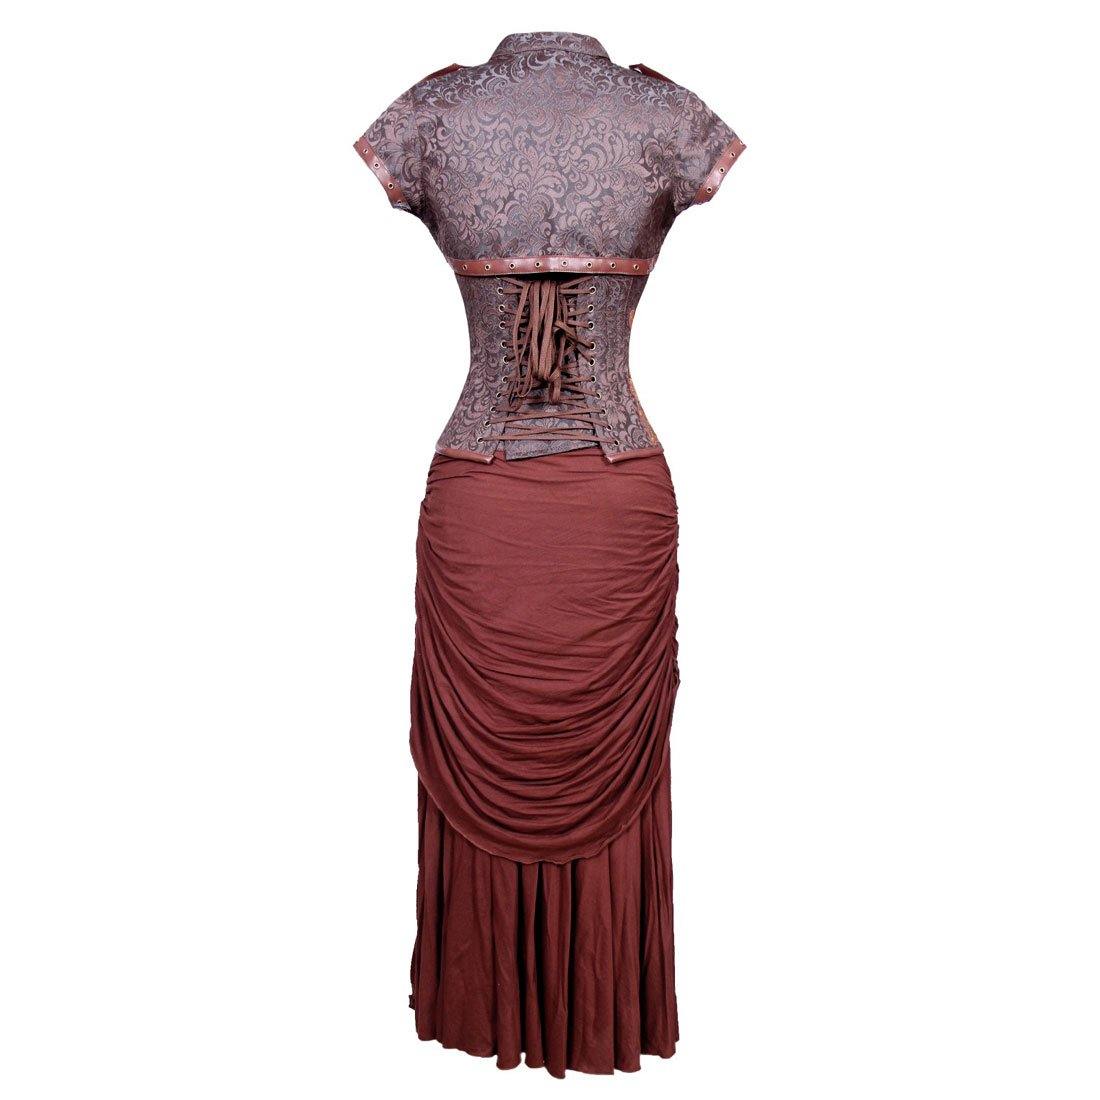 Rachel Steampunk Authentic Steel Boned Underbust Corset Dress - Corset Revolution